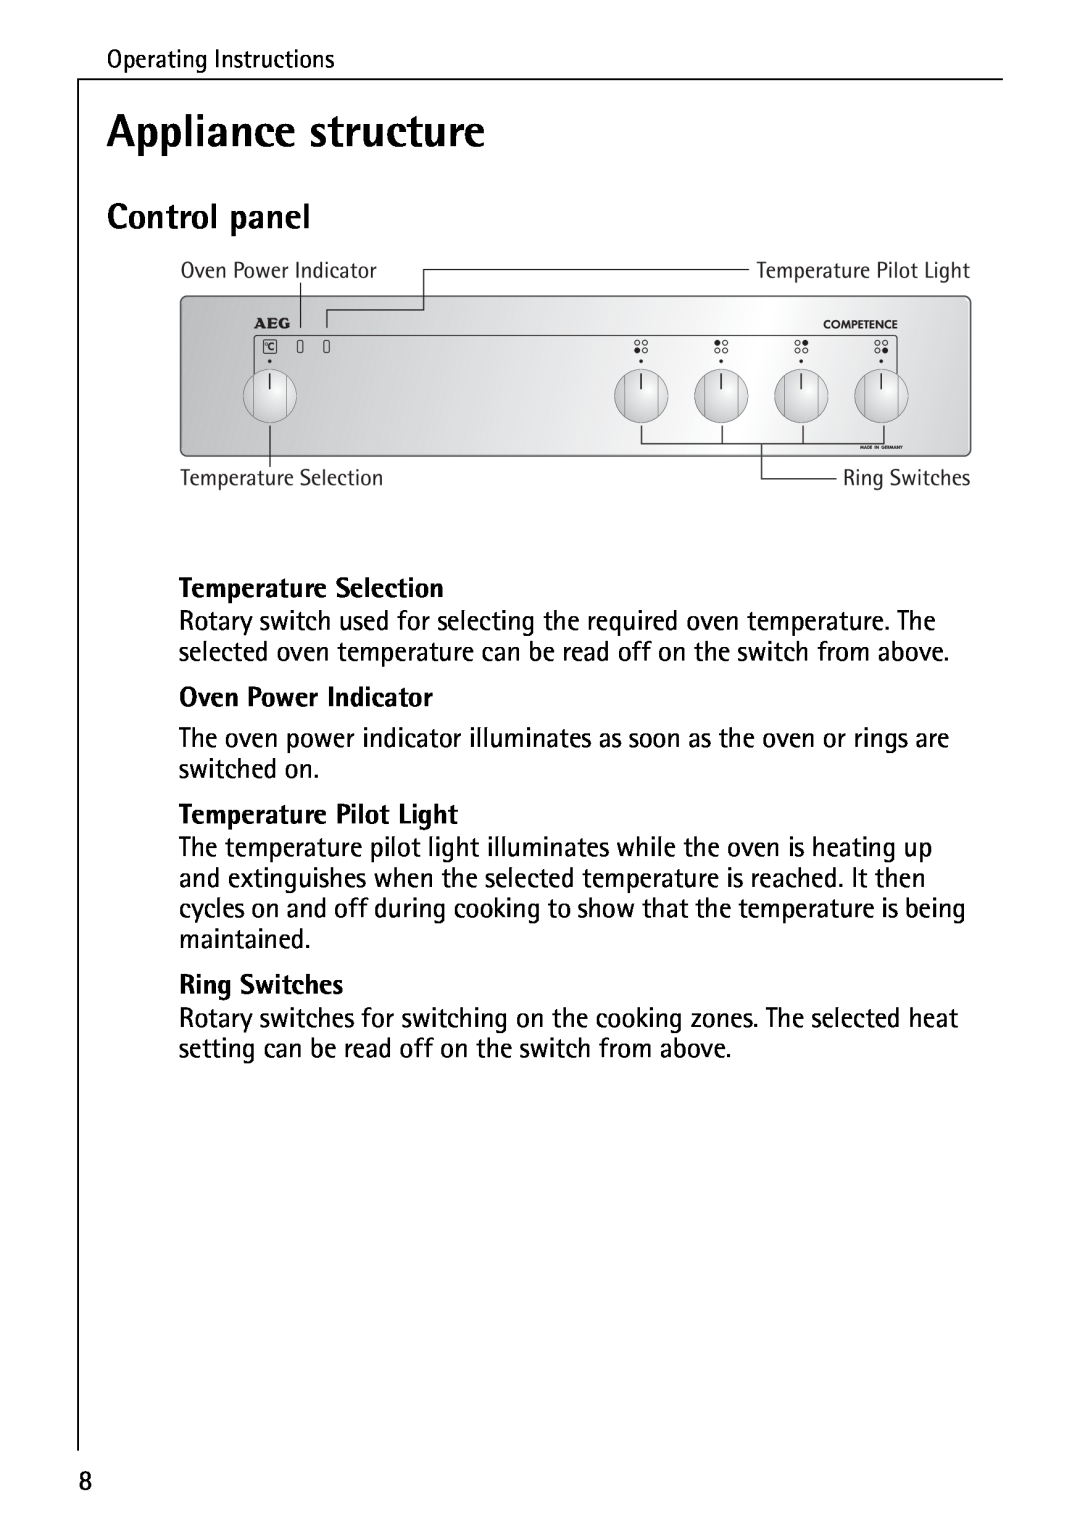 AEG 2003 F Appliance structure, Control panel, Temperature Selection, Oven Power Indicator, Temperature Pilot Light 